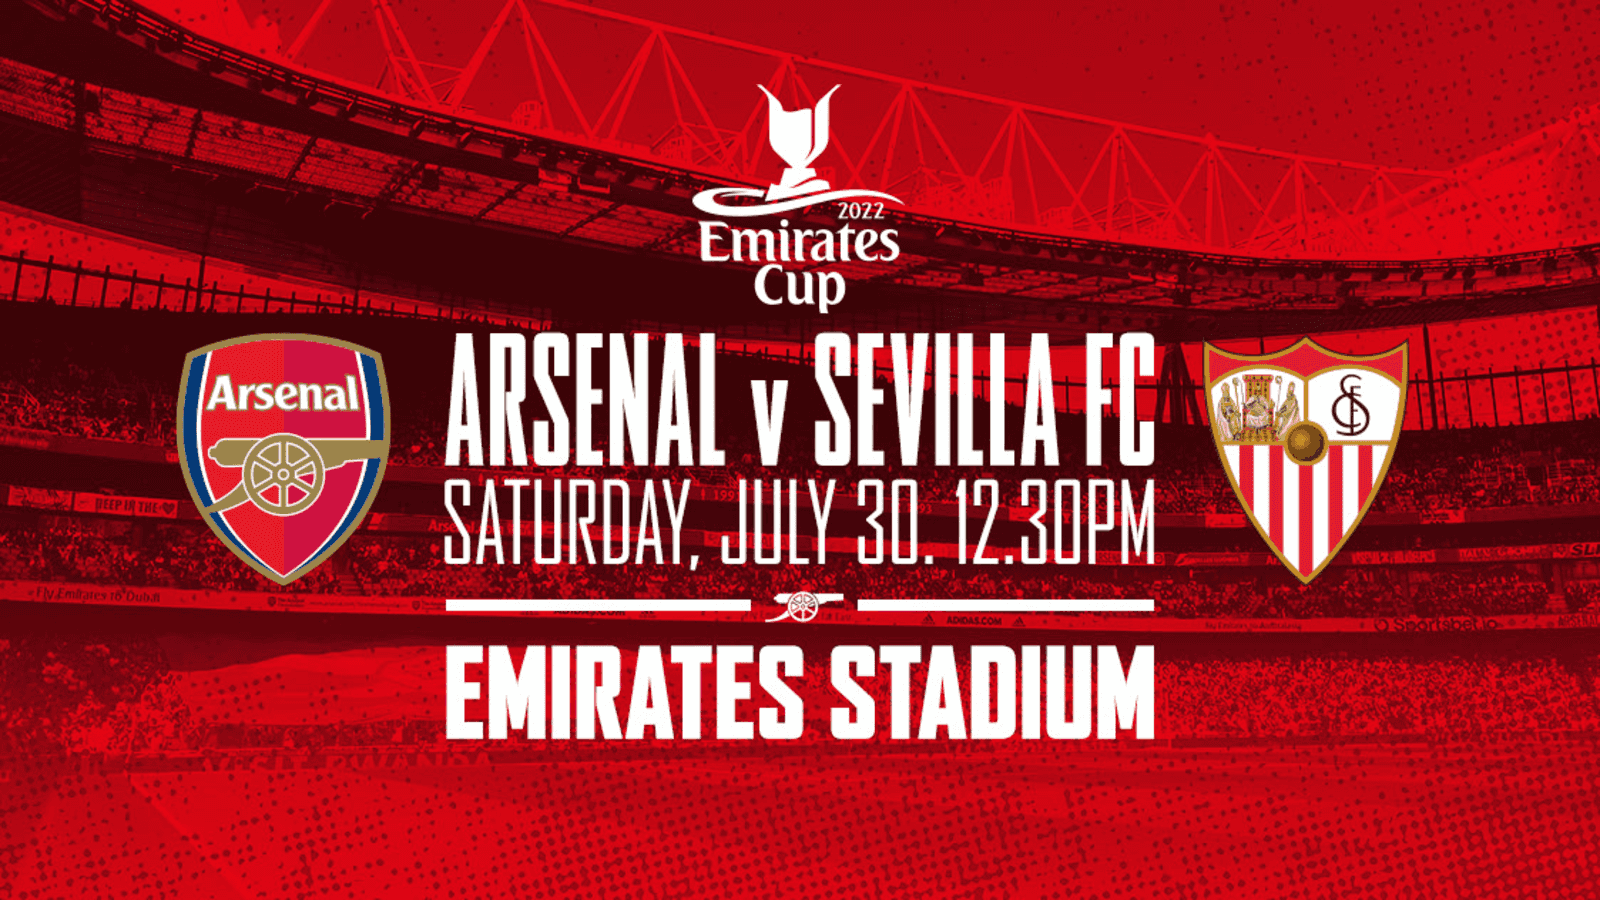 Emirates Cup Returns With Sevilla Fc Clash News Arsenal Com